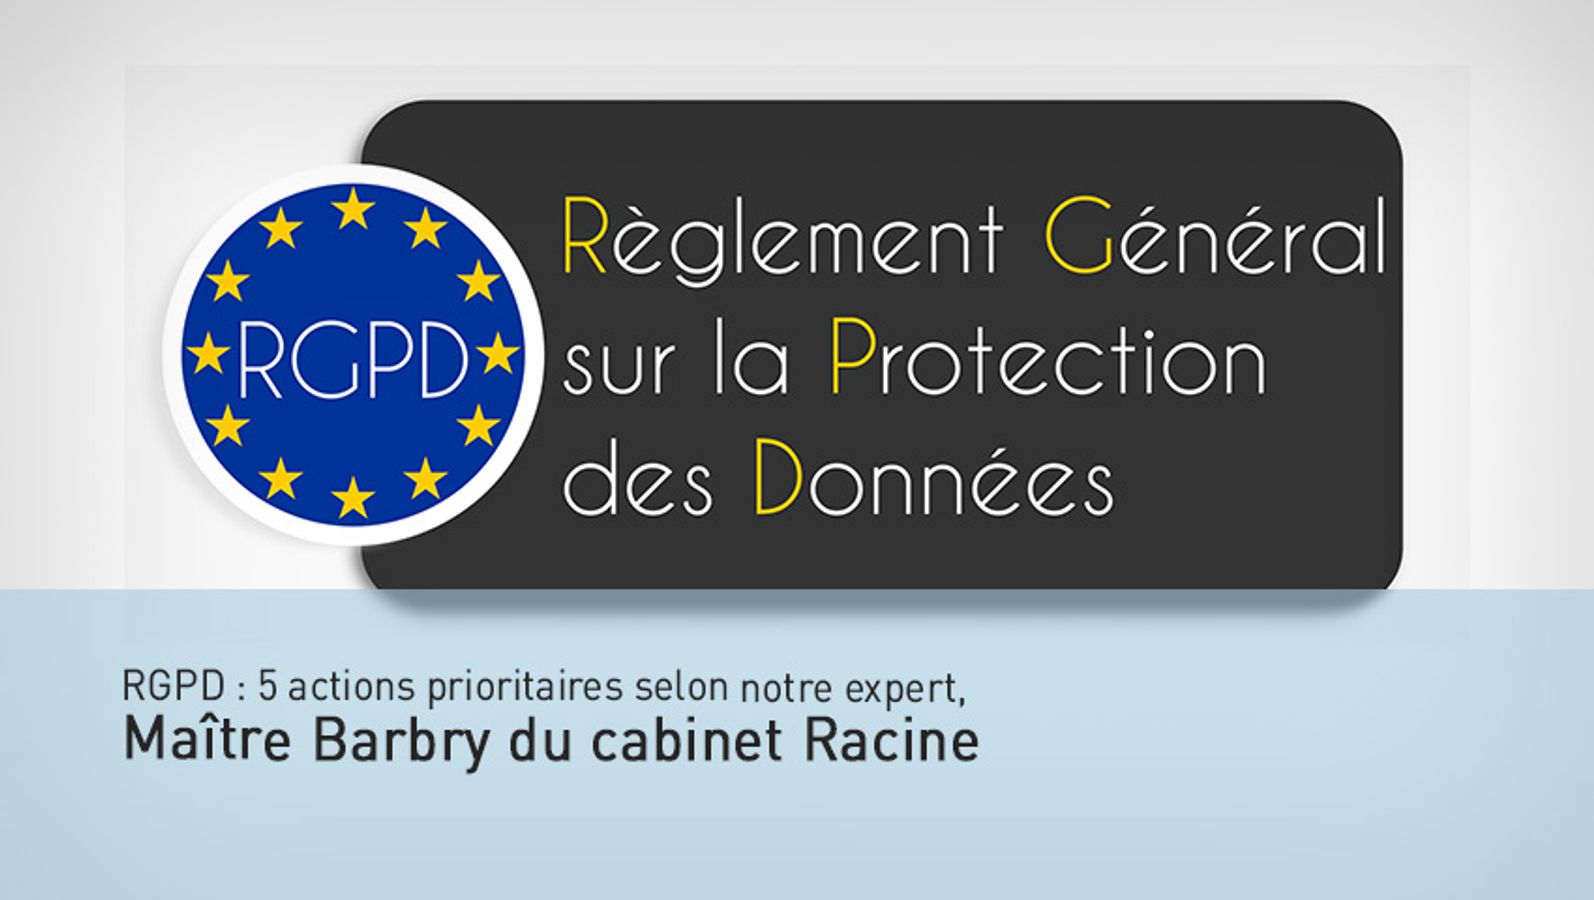 RGPD : 5 actions prioritaires selon notre expert, Maître Barbry du cabinet Racine